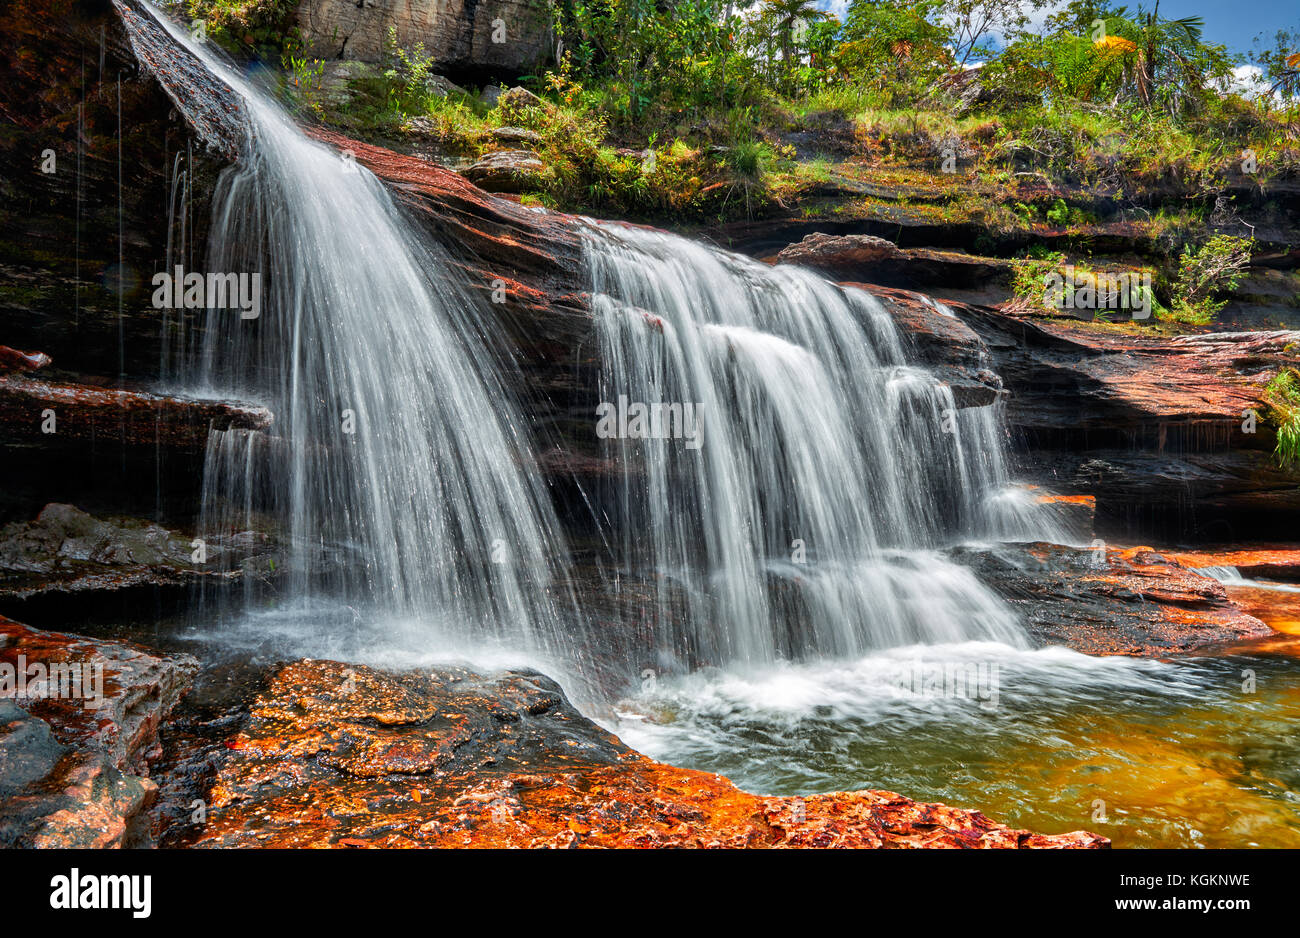 a waterfall at Cano Cristales called the 'River of Five Colors' or the 'Liquid Rainbow', Serrania de la Macarena, La Macarena, Colombia, South America Stock Photo